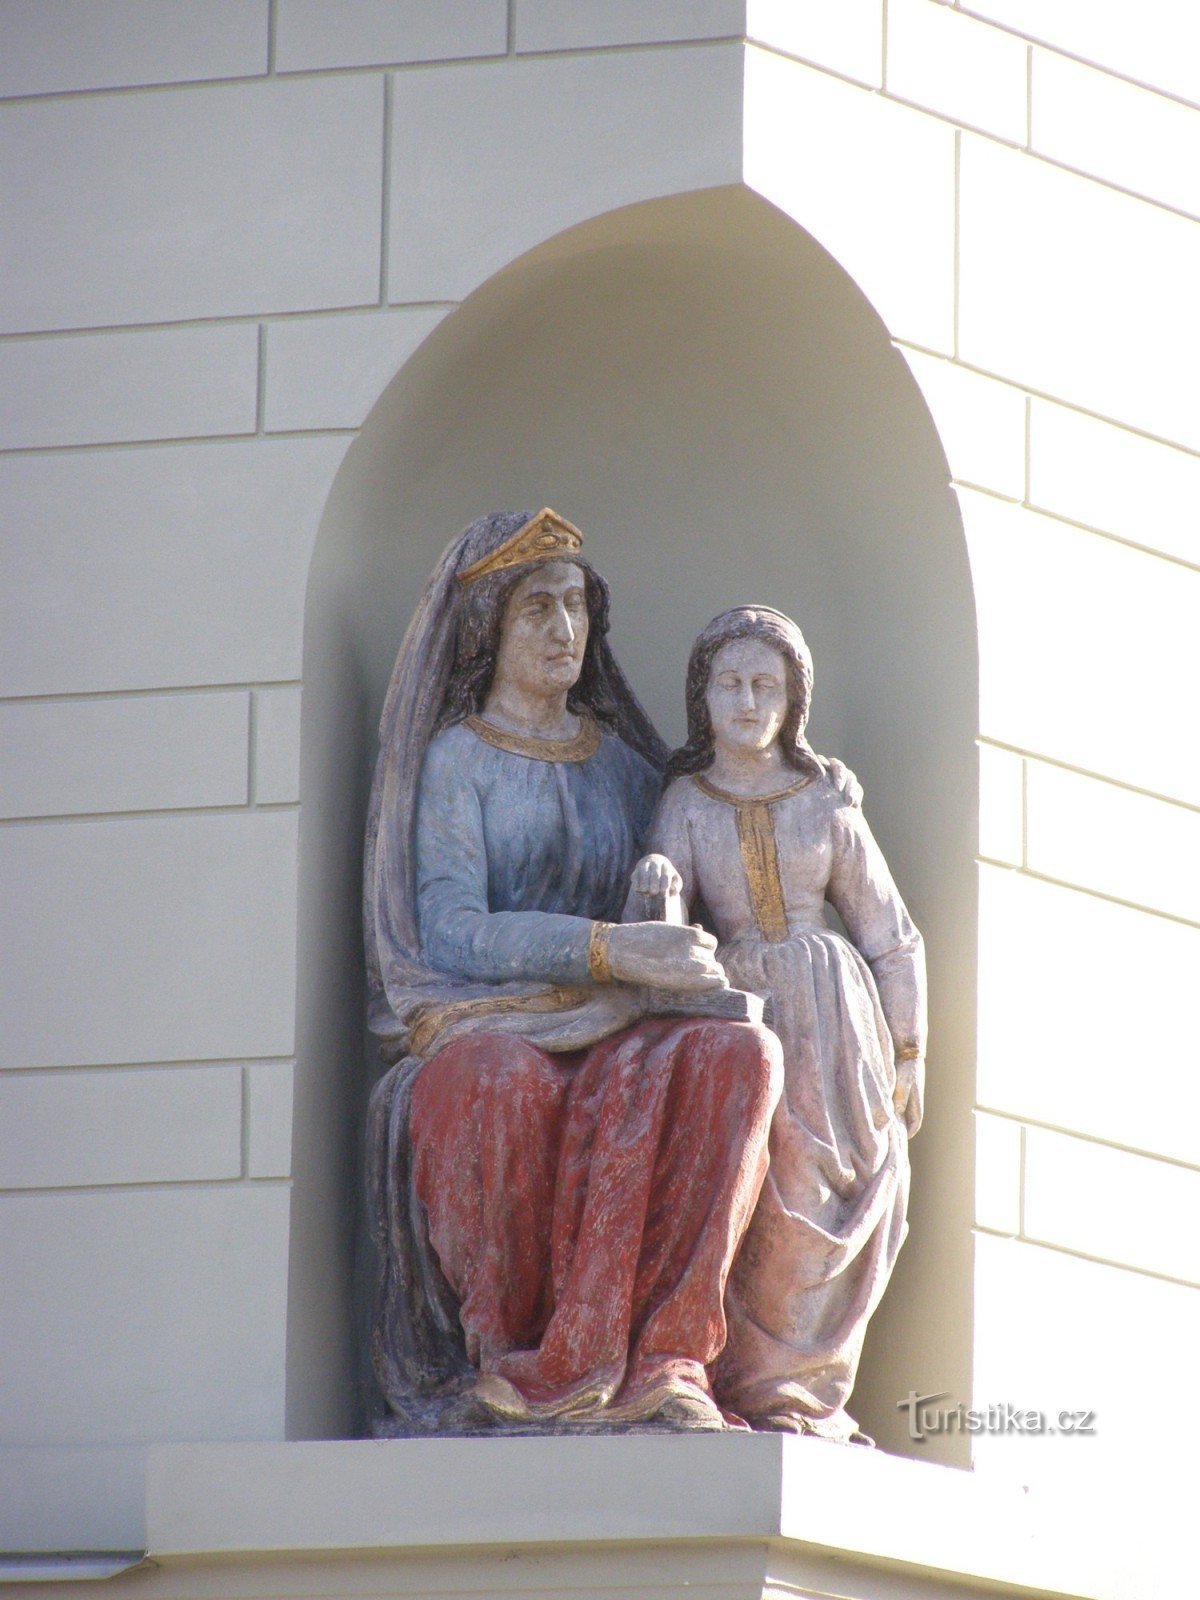 Týnec nad Labem - 74 号市民住宅，内有圣约翰雕像安妮和圣母玛利亚